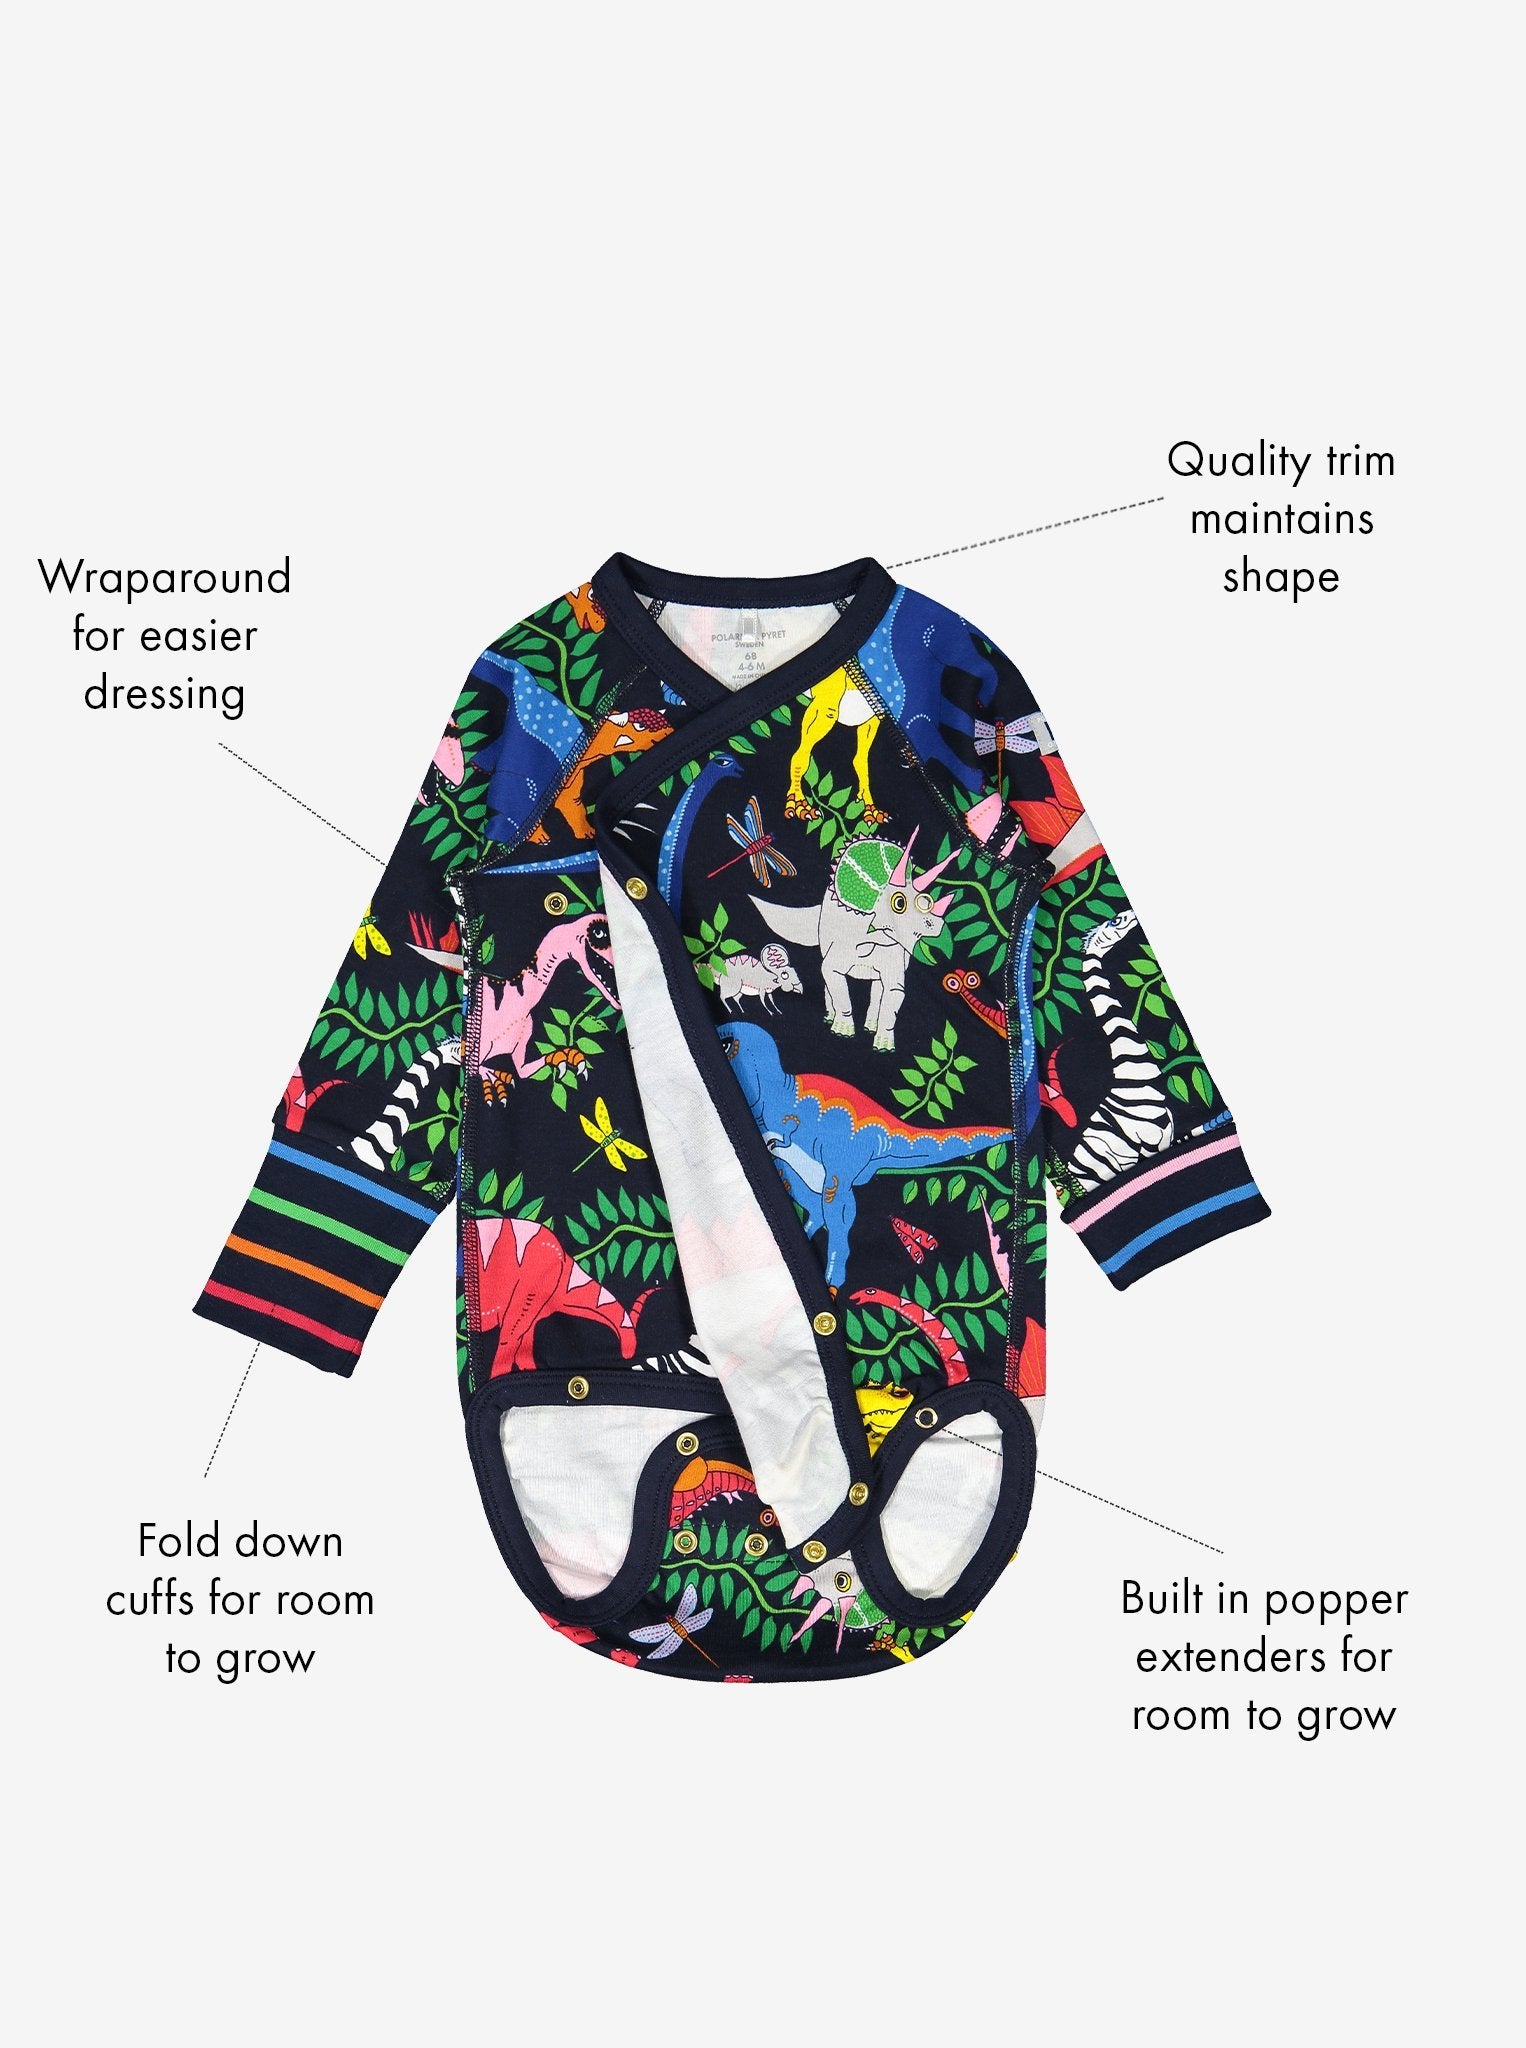 Dinosaur Baby Grow, Ethical Baby Clothes| Polarn O. Pyret UK